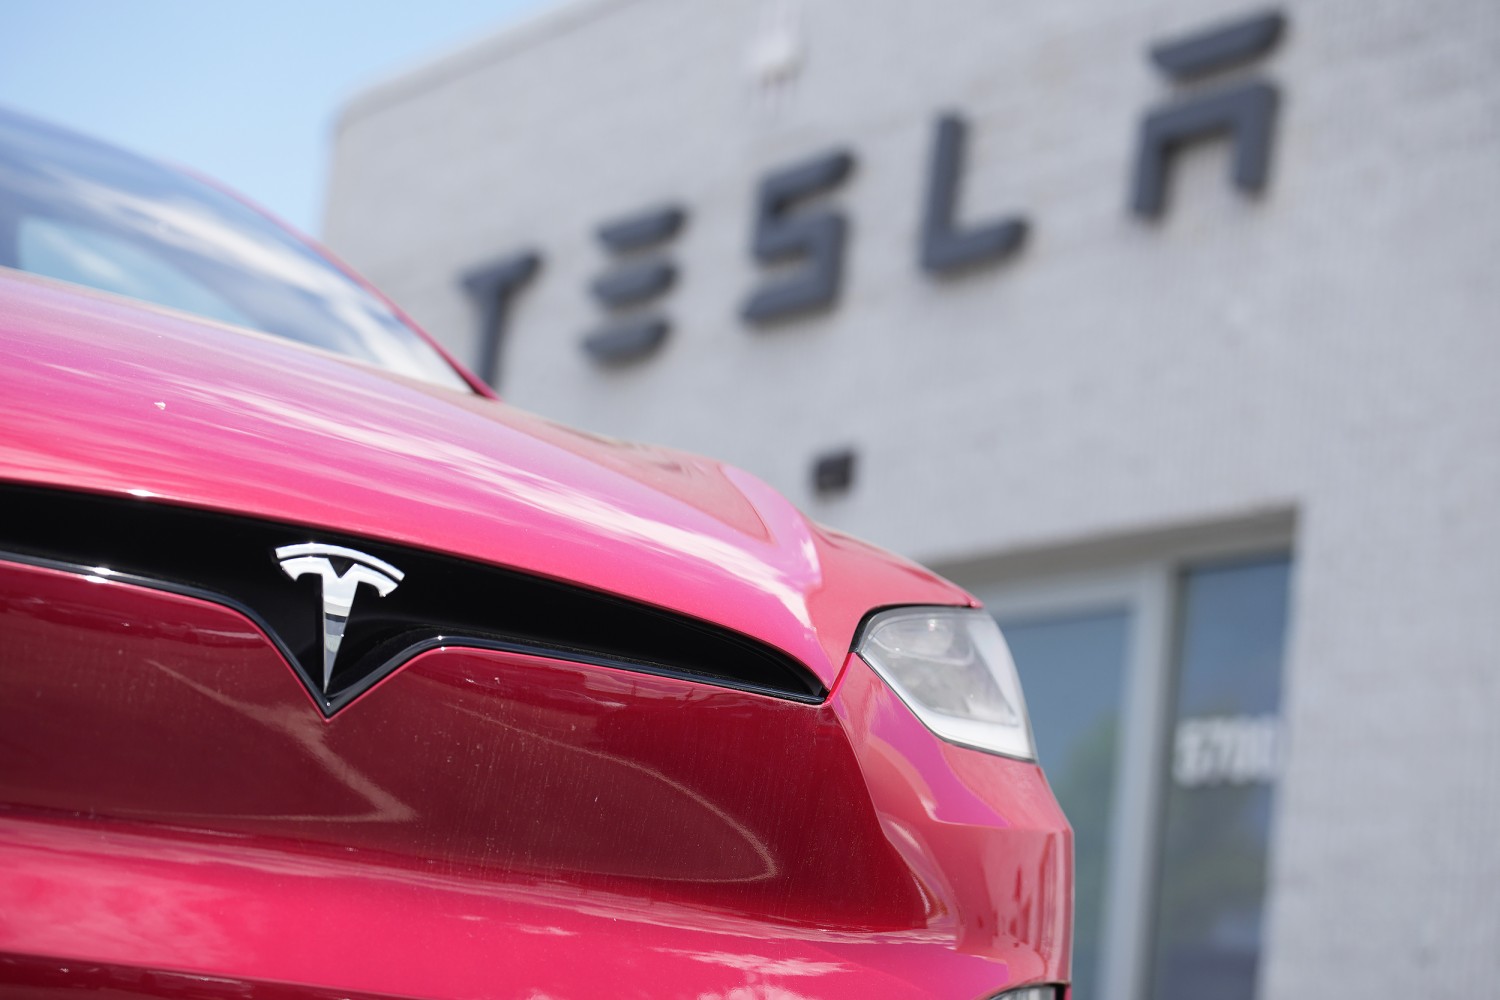 Tesla Recalls More Than 2 Million Vehicles Over Autopilot Safety